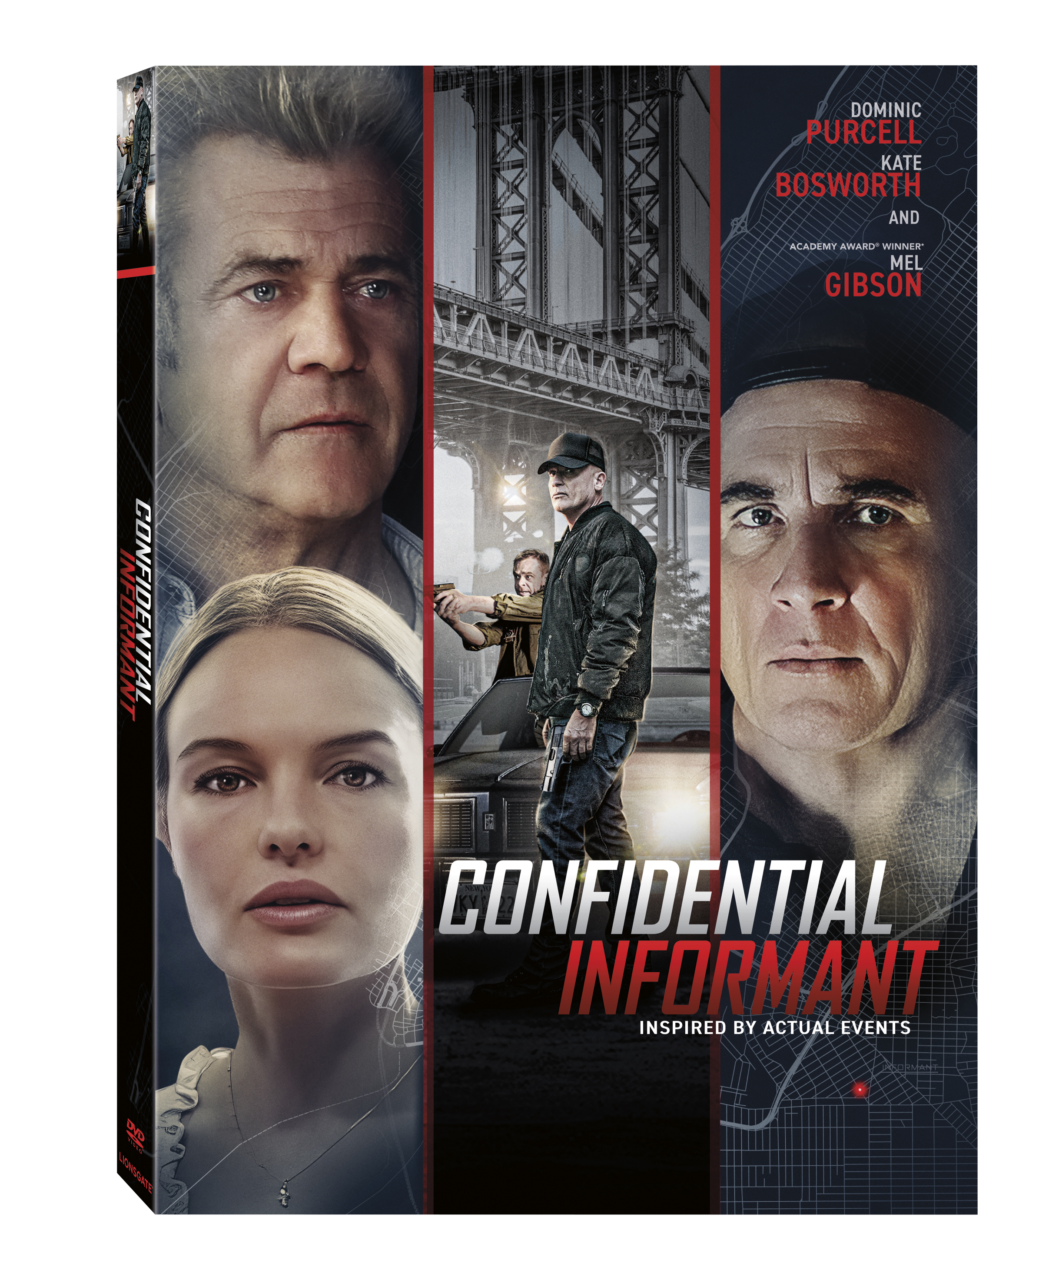 Confidential Informant DVD cover (Lionsgate)